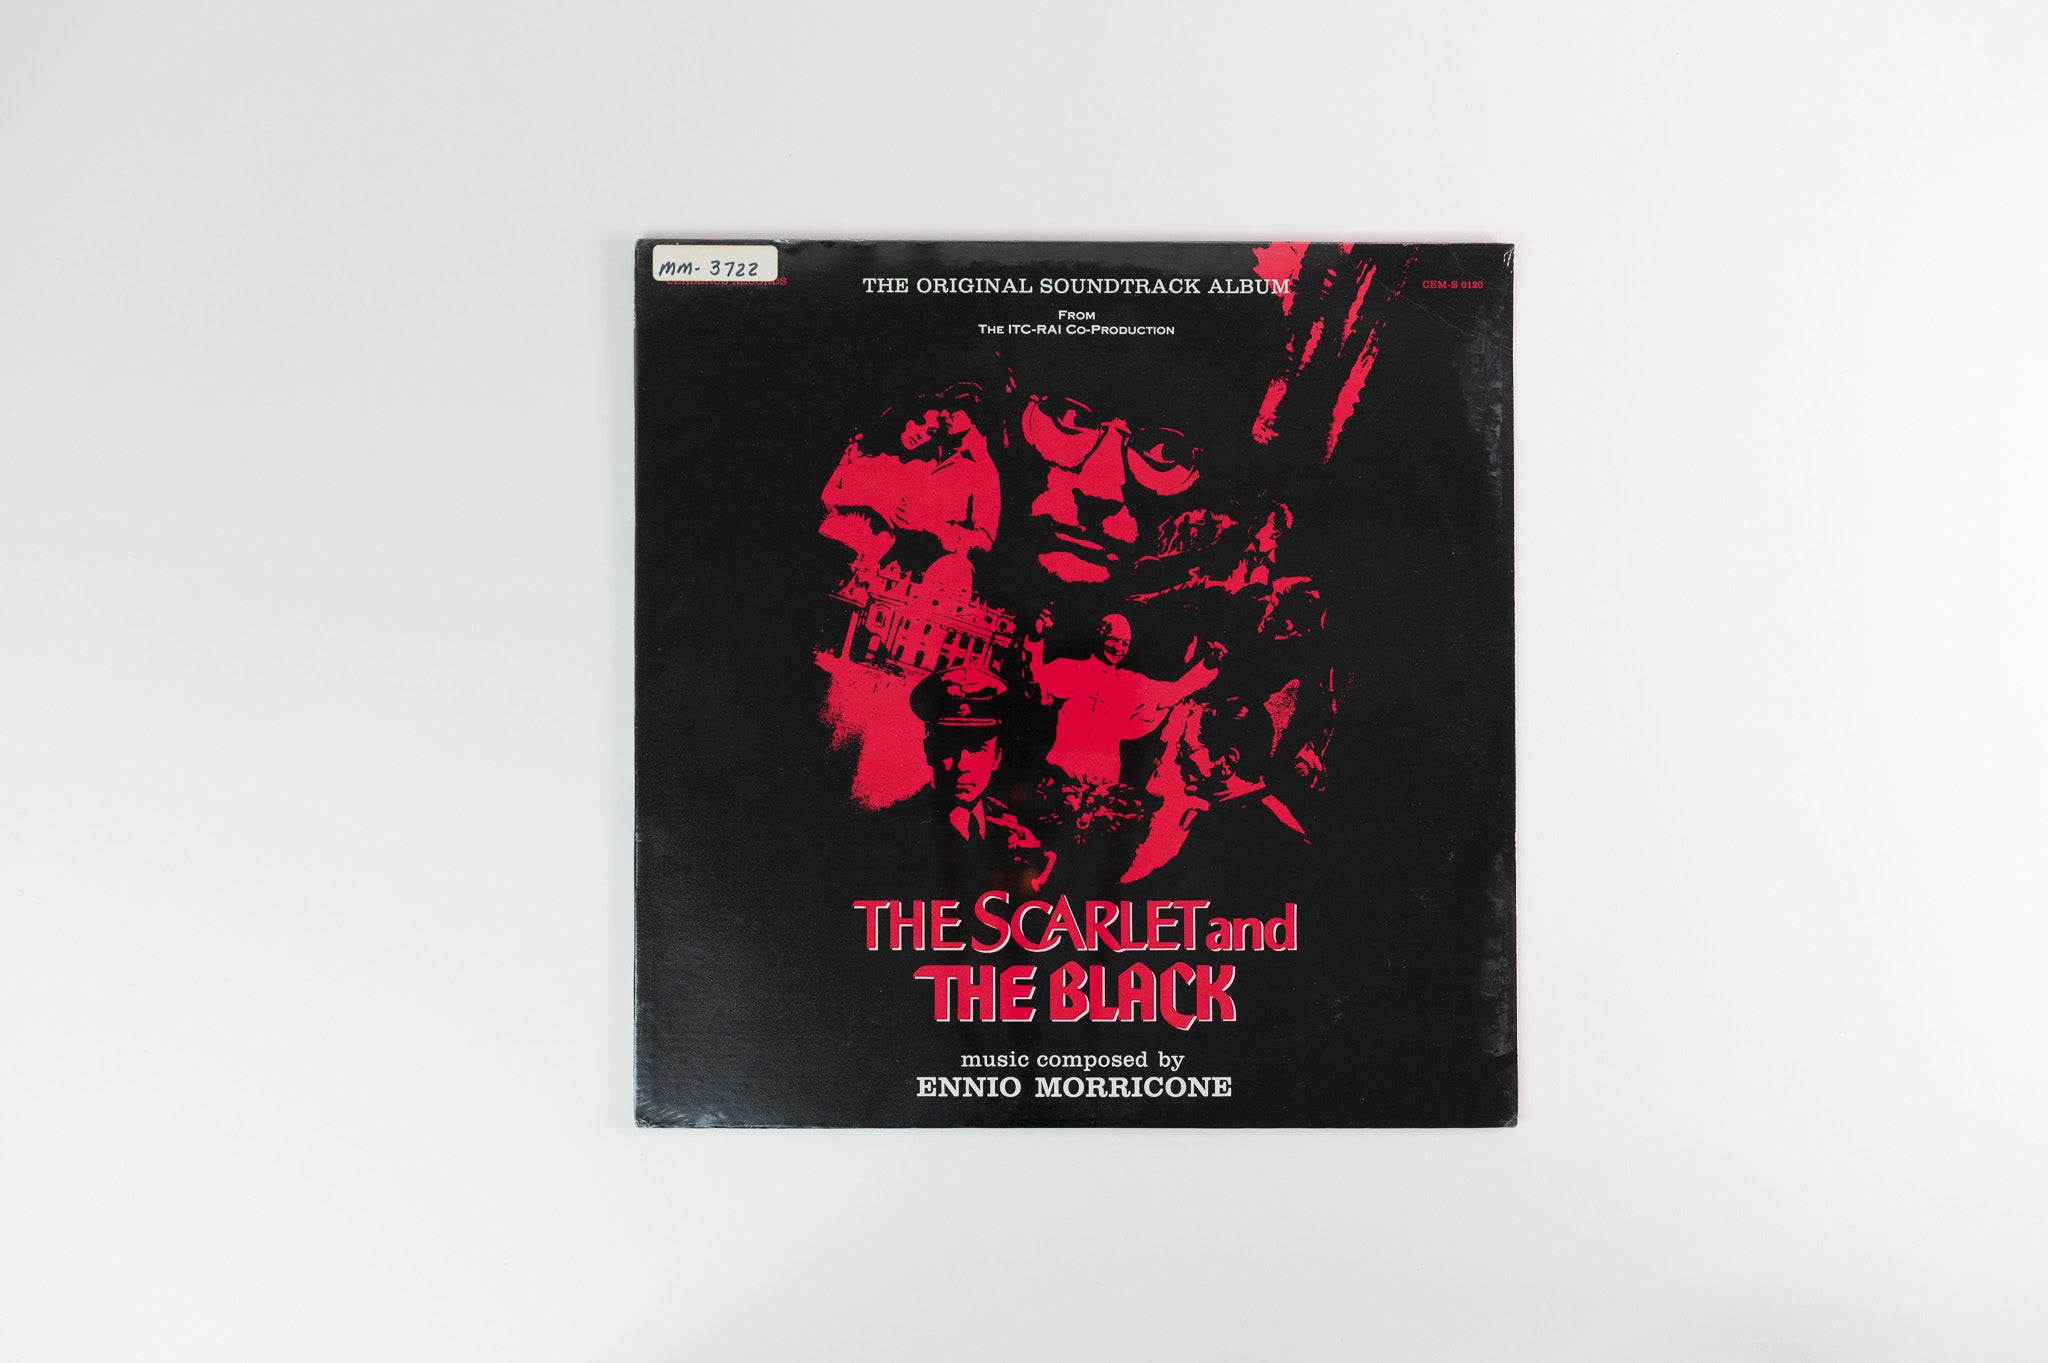 Ennio Morricone - The Scarlet And The Black (The Original Soundtrack Album) on Cerberus Records - Sealed